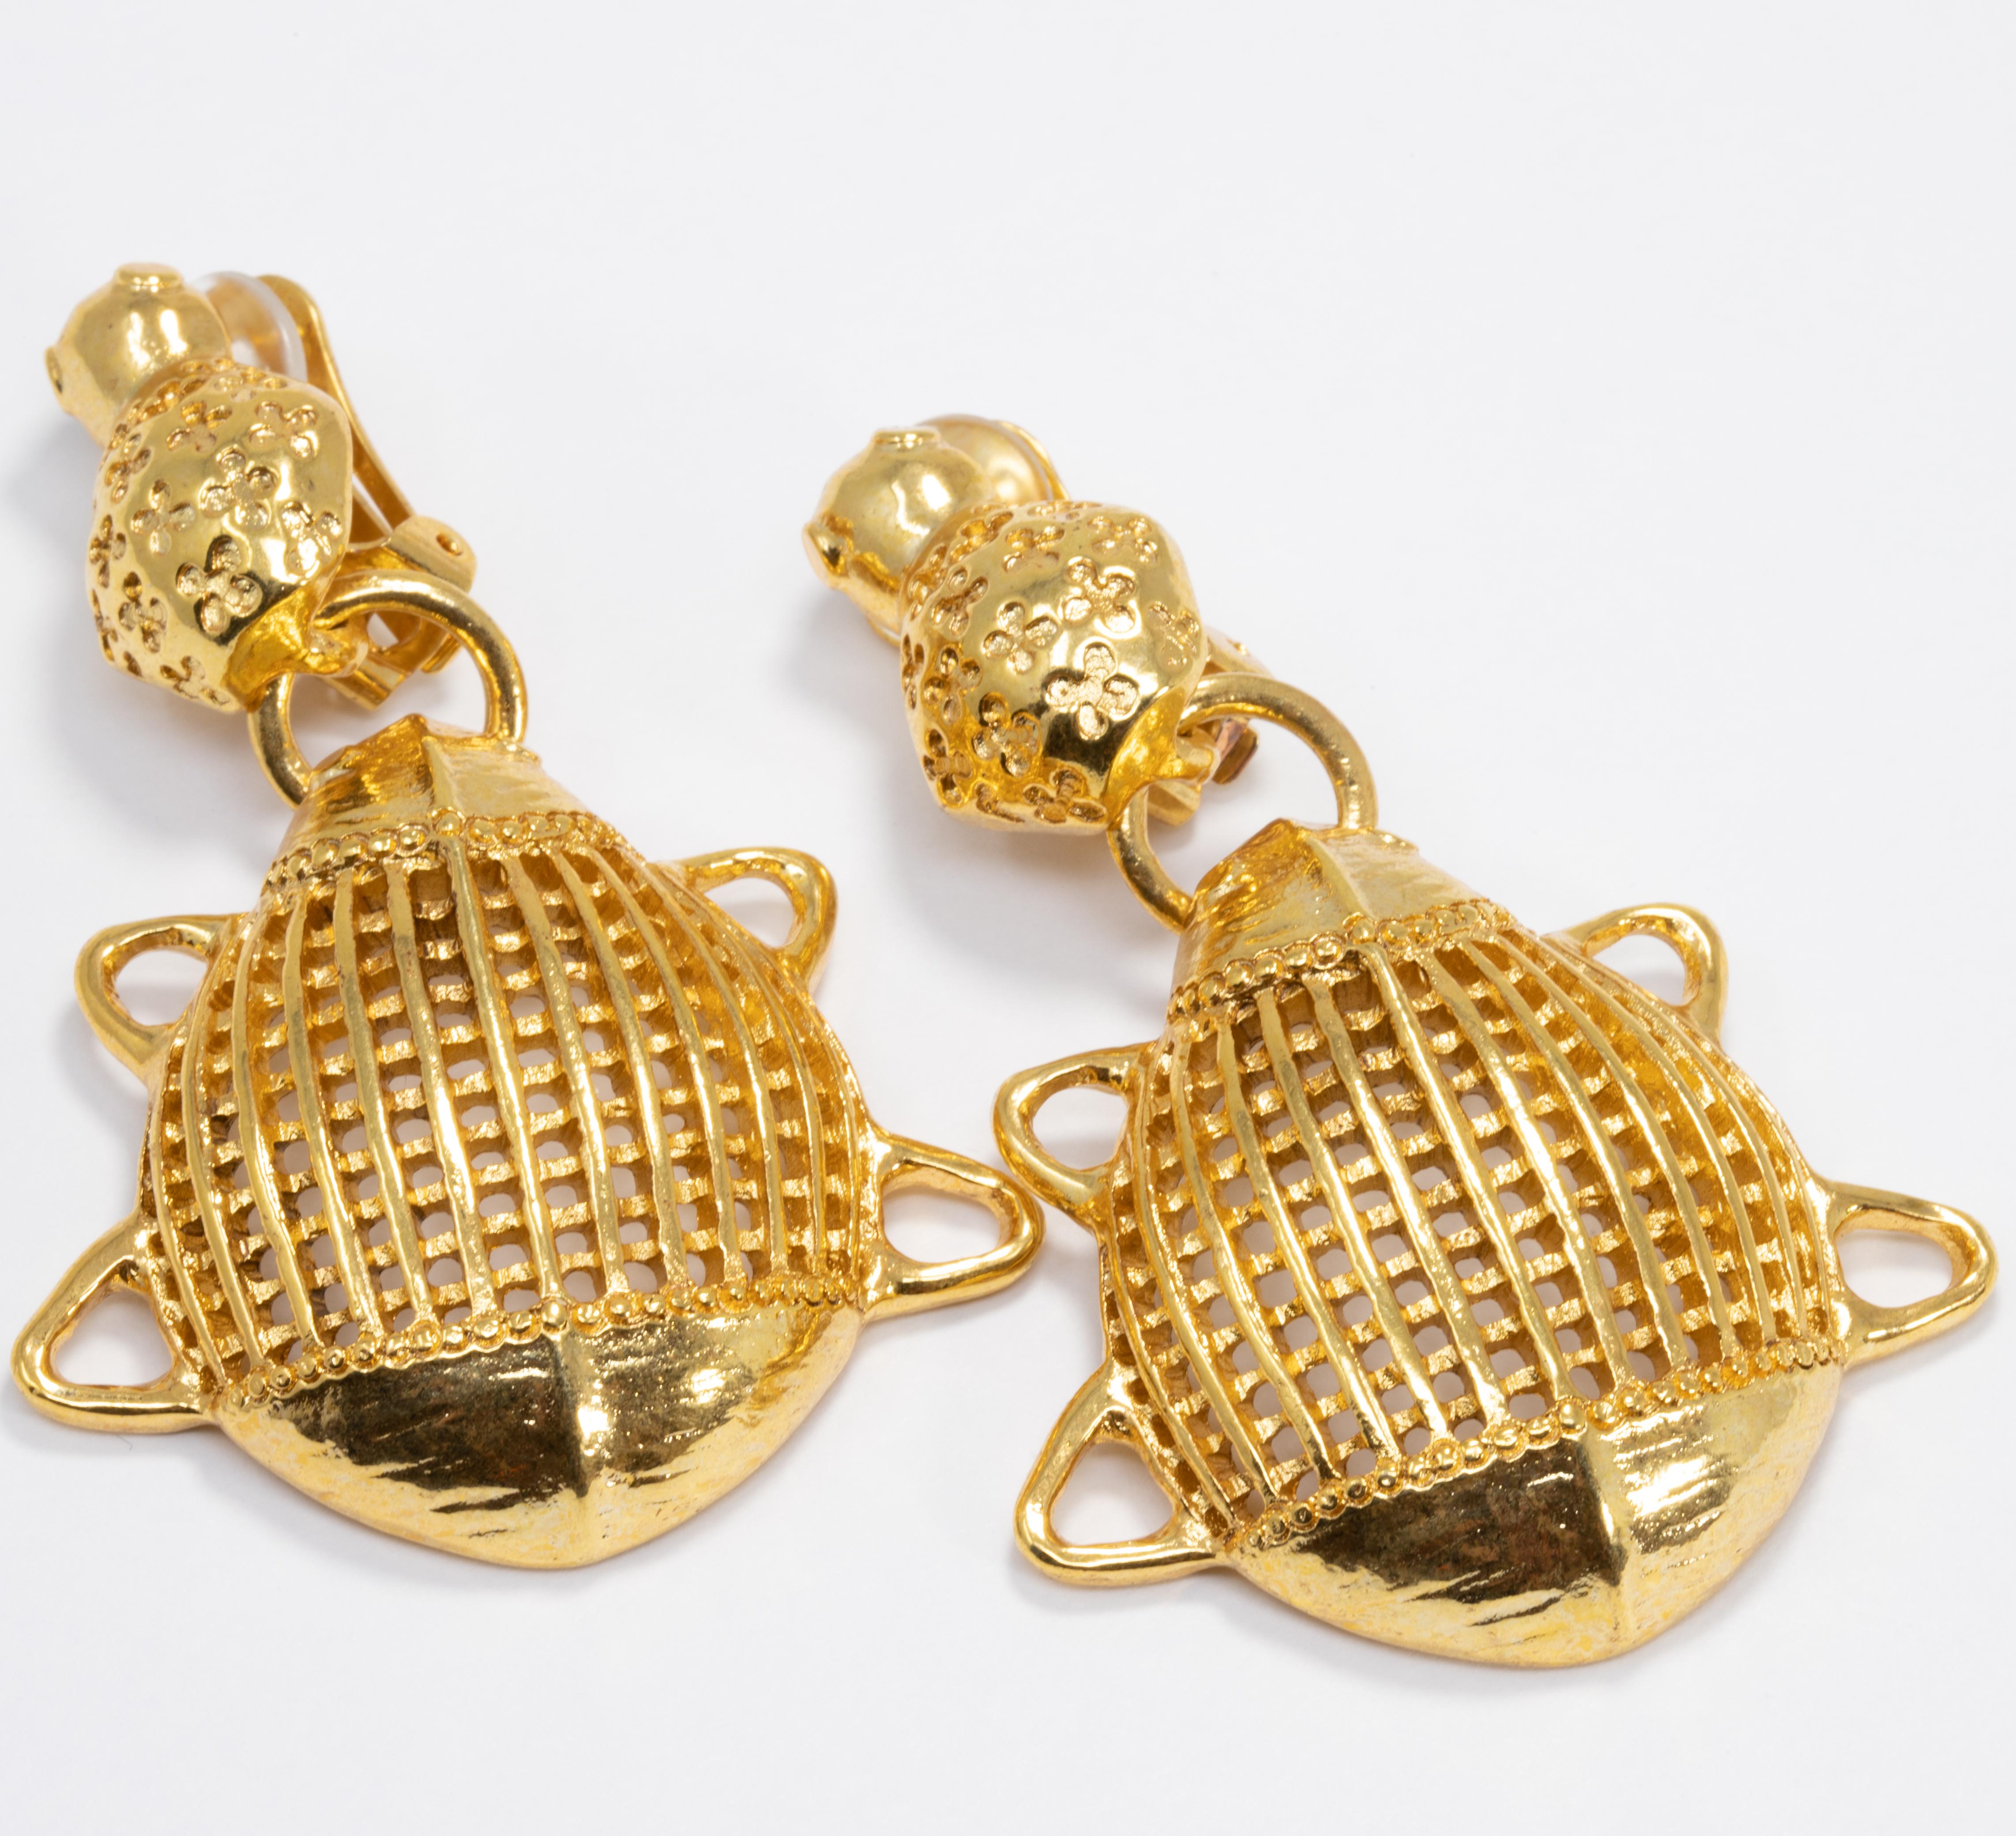 Luxurious clip on earrings in Oscar de la Renta's signature style. A pair of elegant gold-plated stylized scarabs!

Hallmarks: Oscar de la Renta, Made in USA